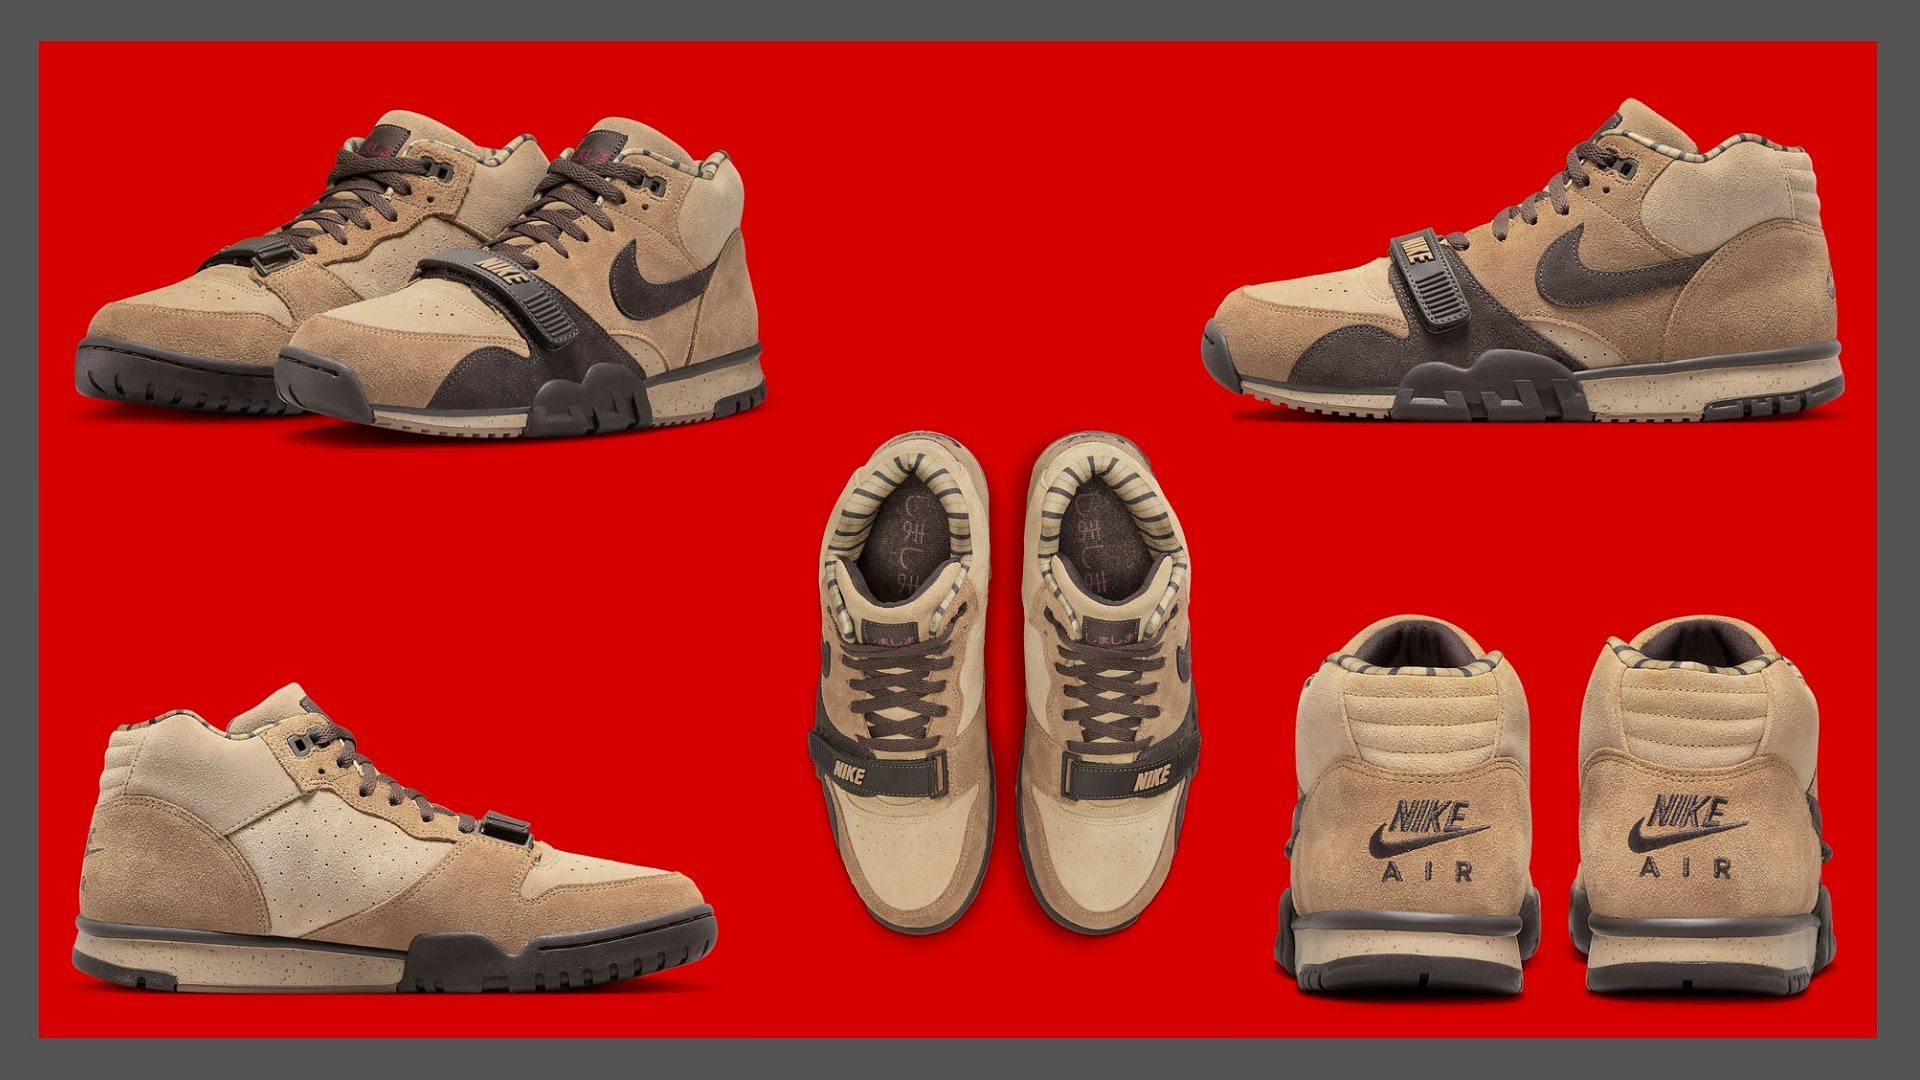 Take a detailed look at the Nike Air Trainer 1 Shima Shima shoes (Image via Sportskeeda)